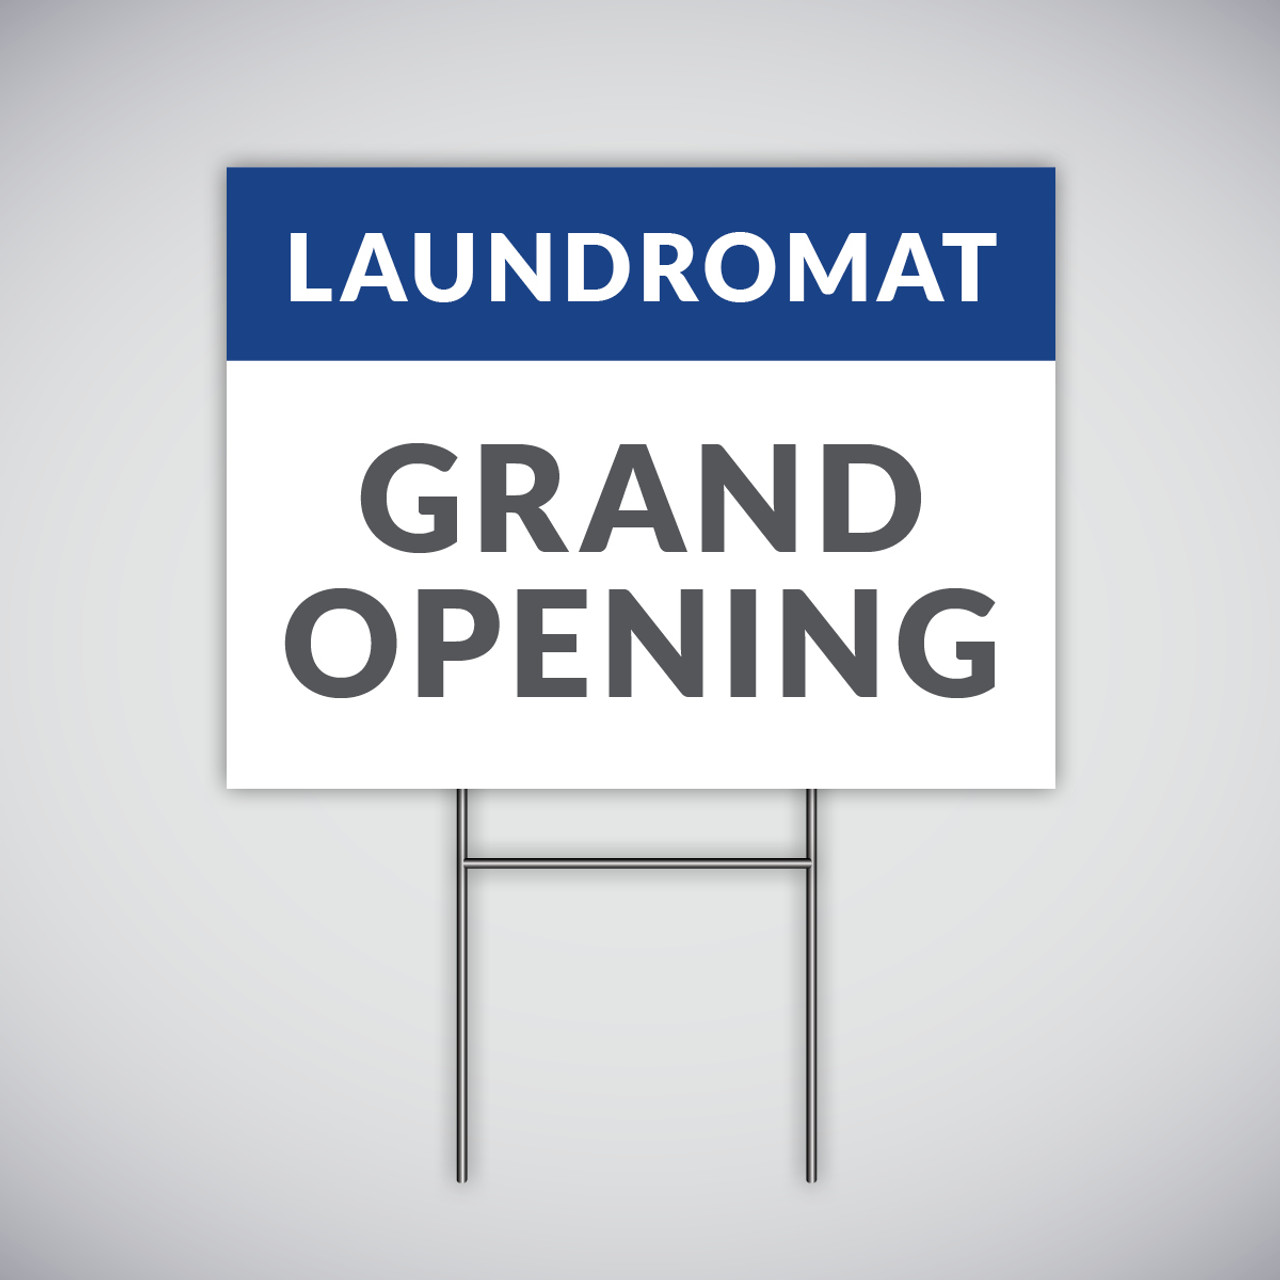 Laundromat Grand Opening Yard Sign - Blue